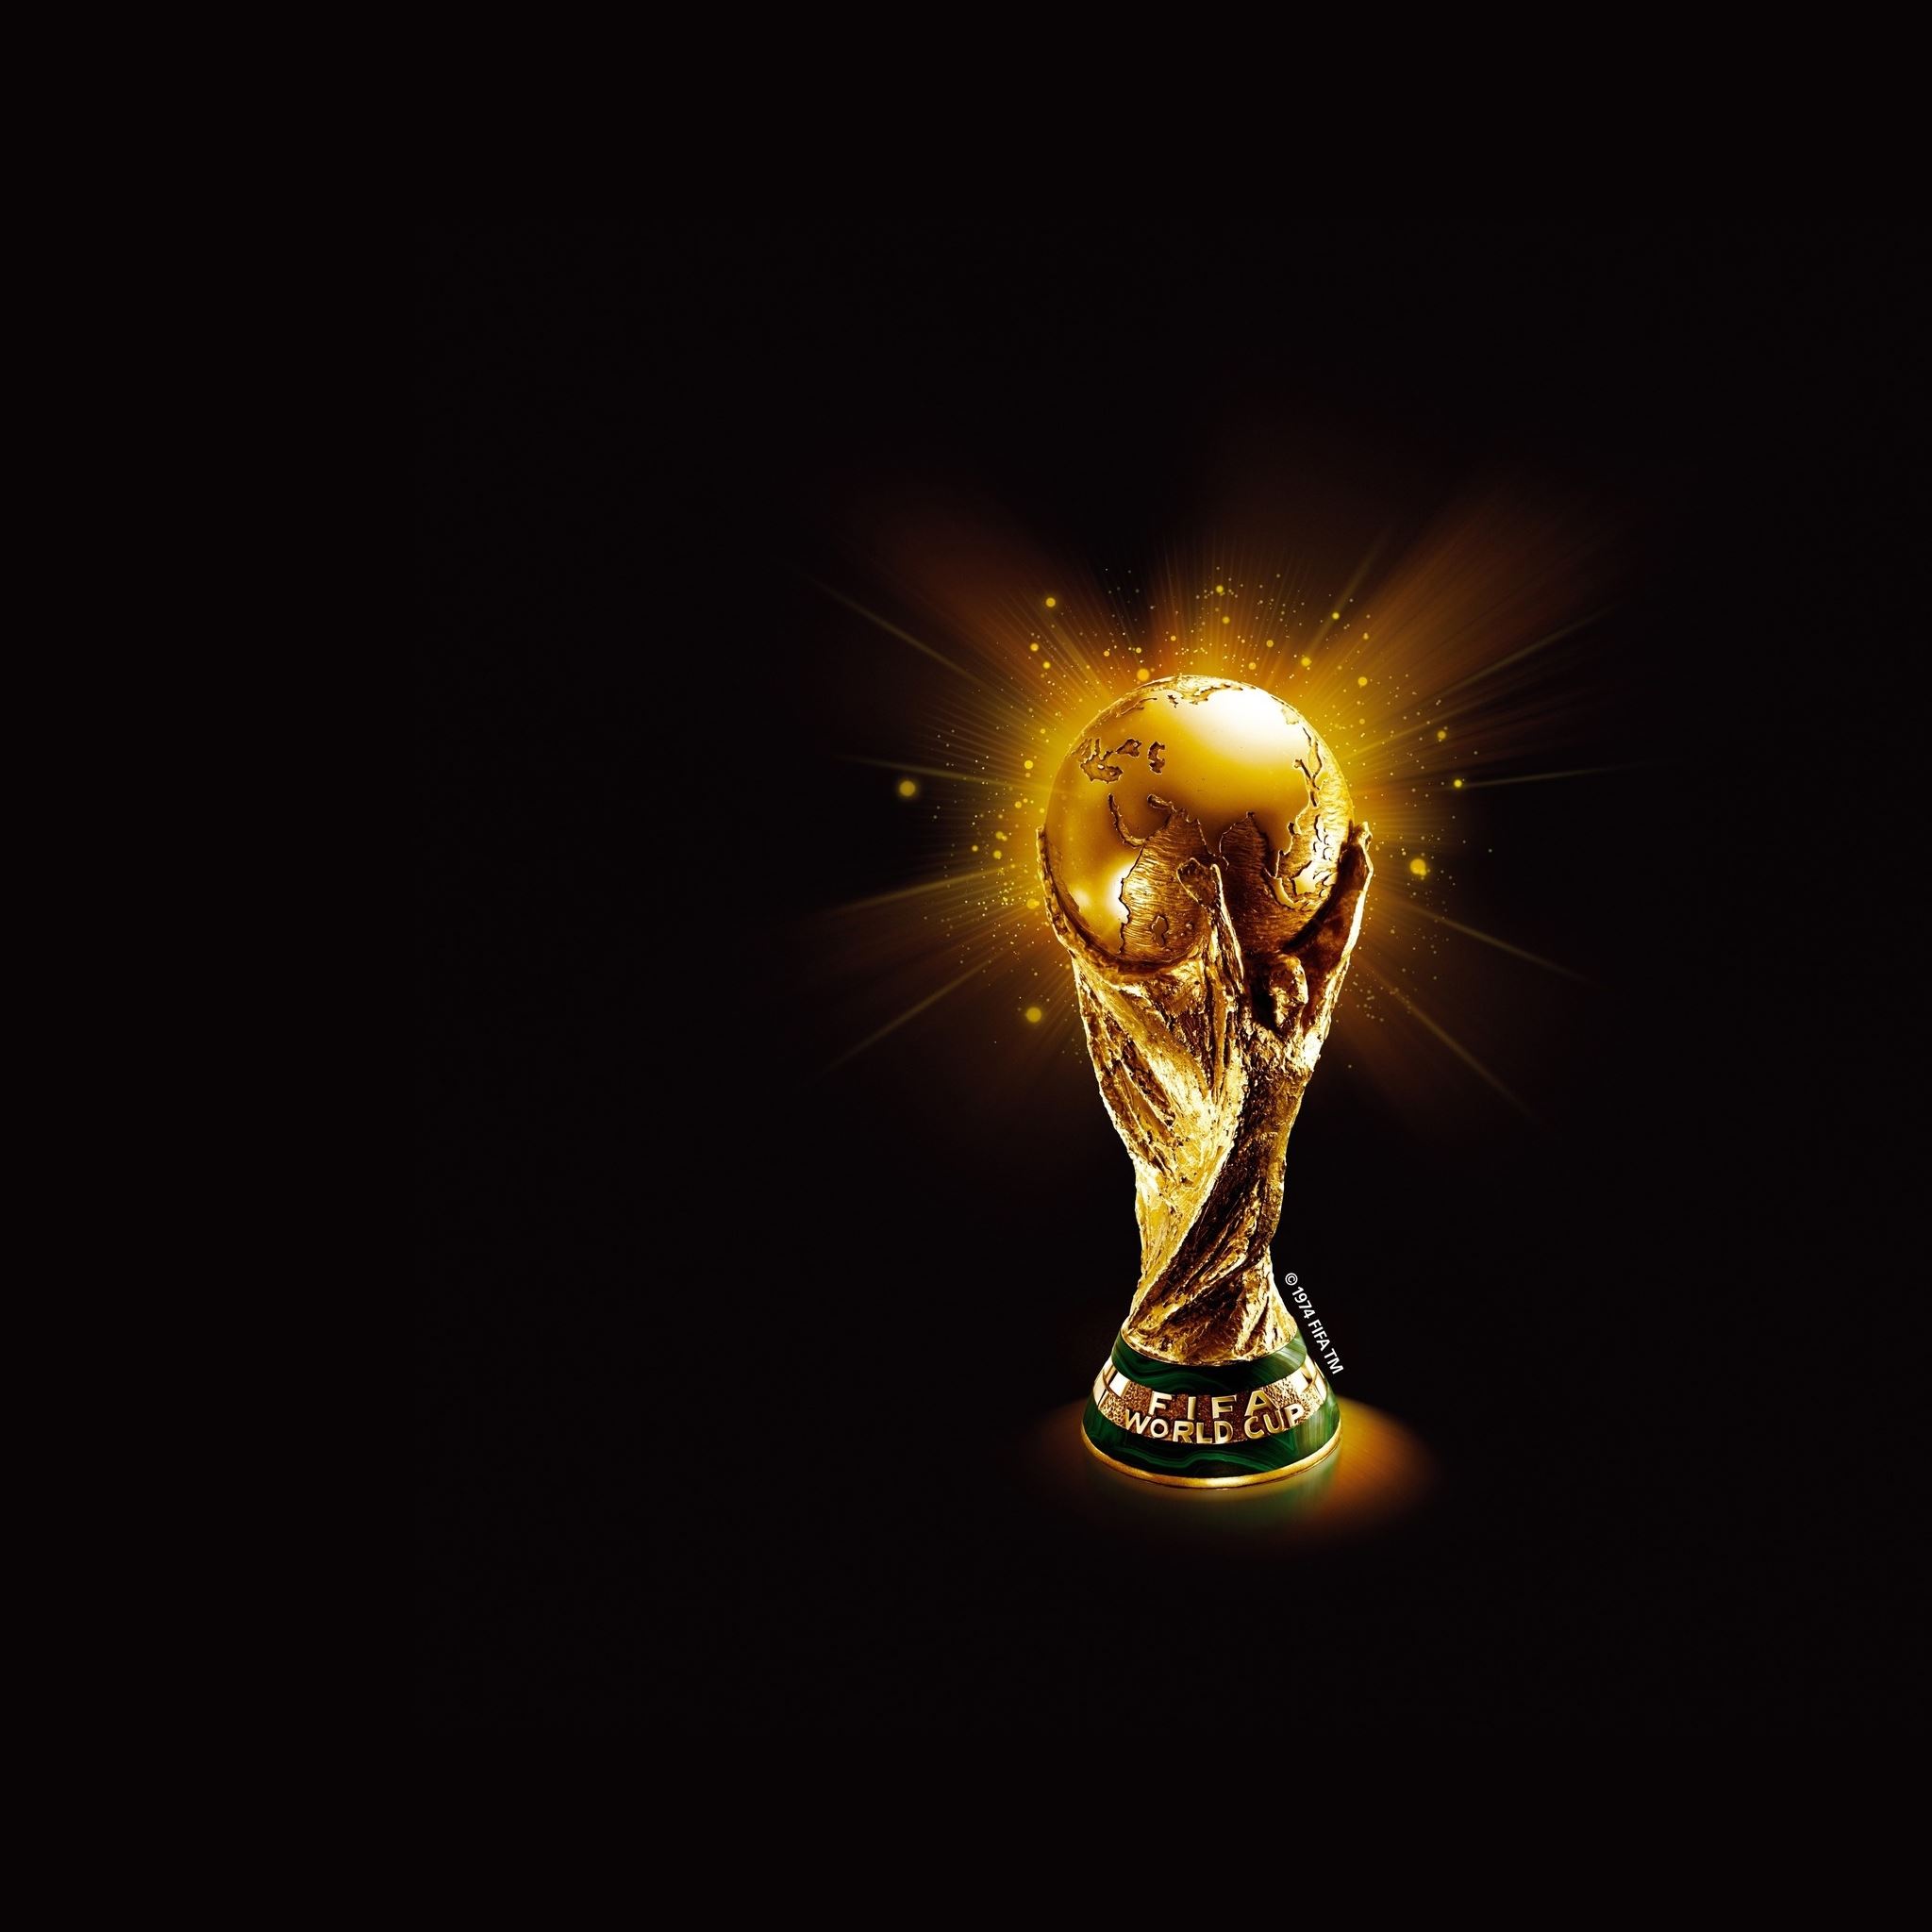 FIFA World Cup iPad Air wallpaper 